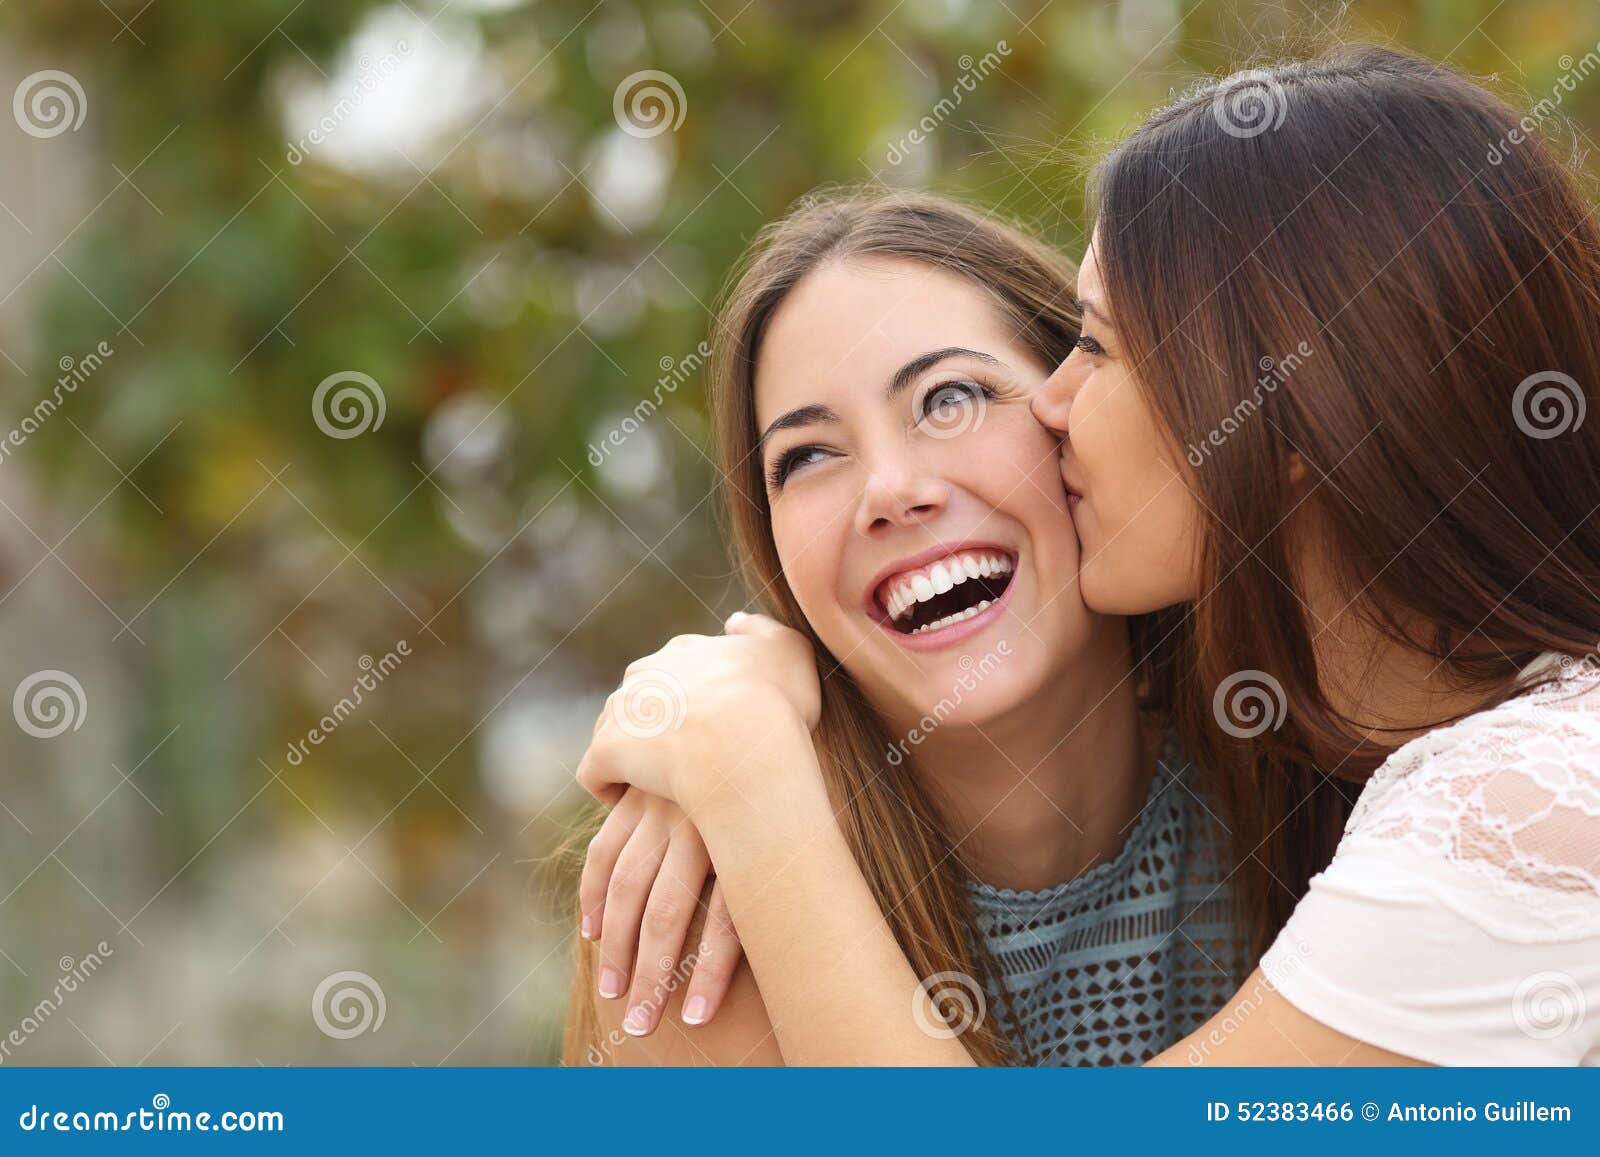 Lesbians Kissing Galleries